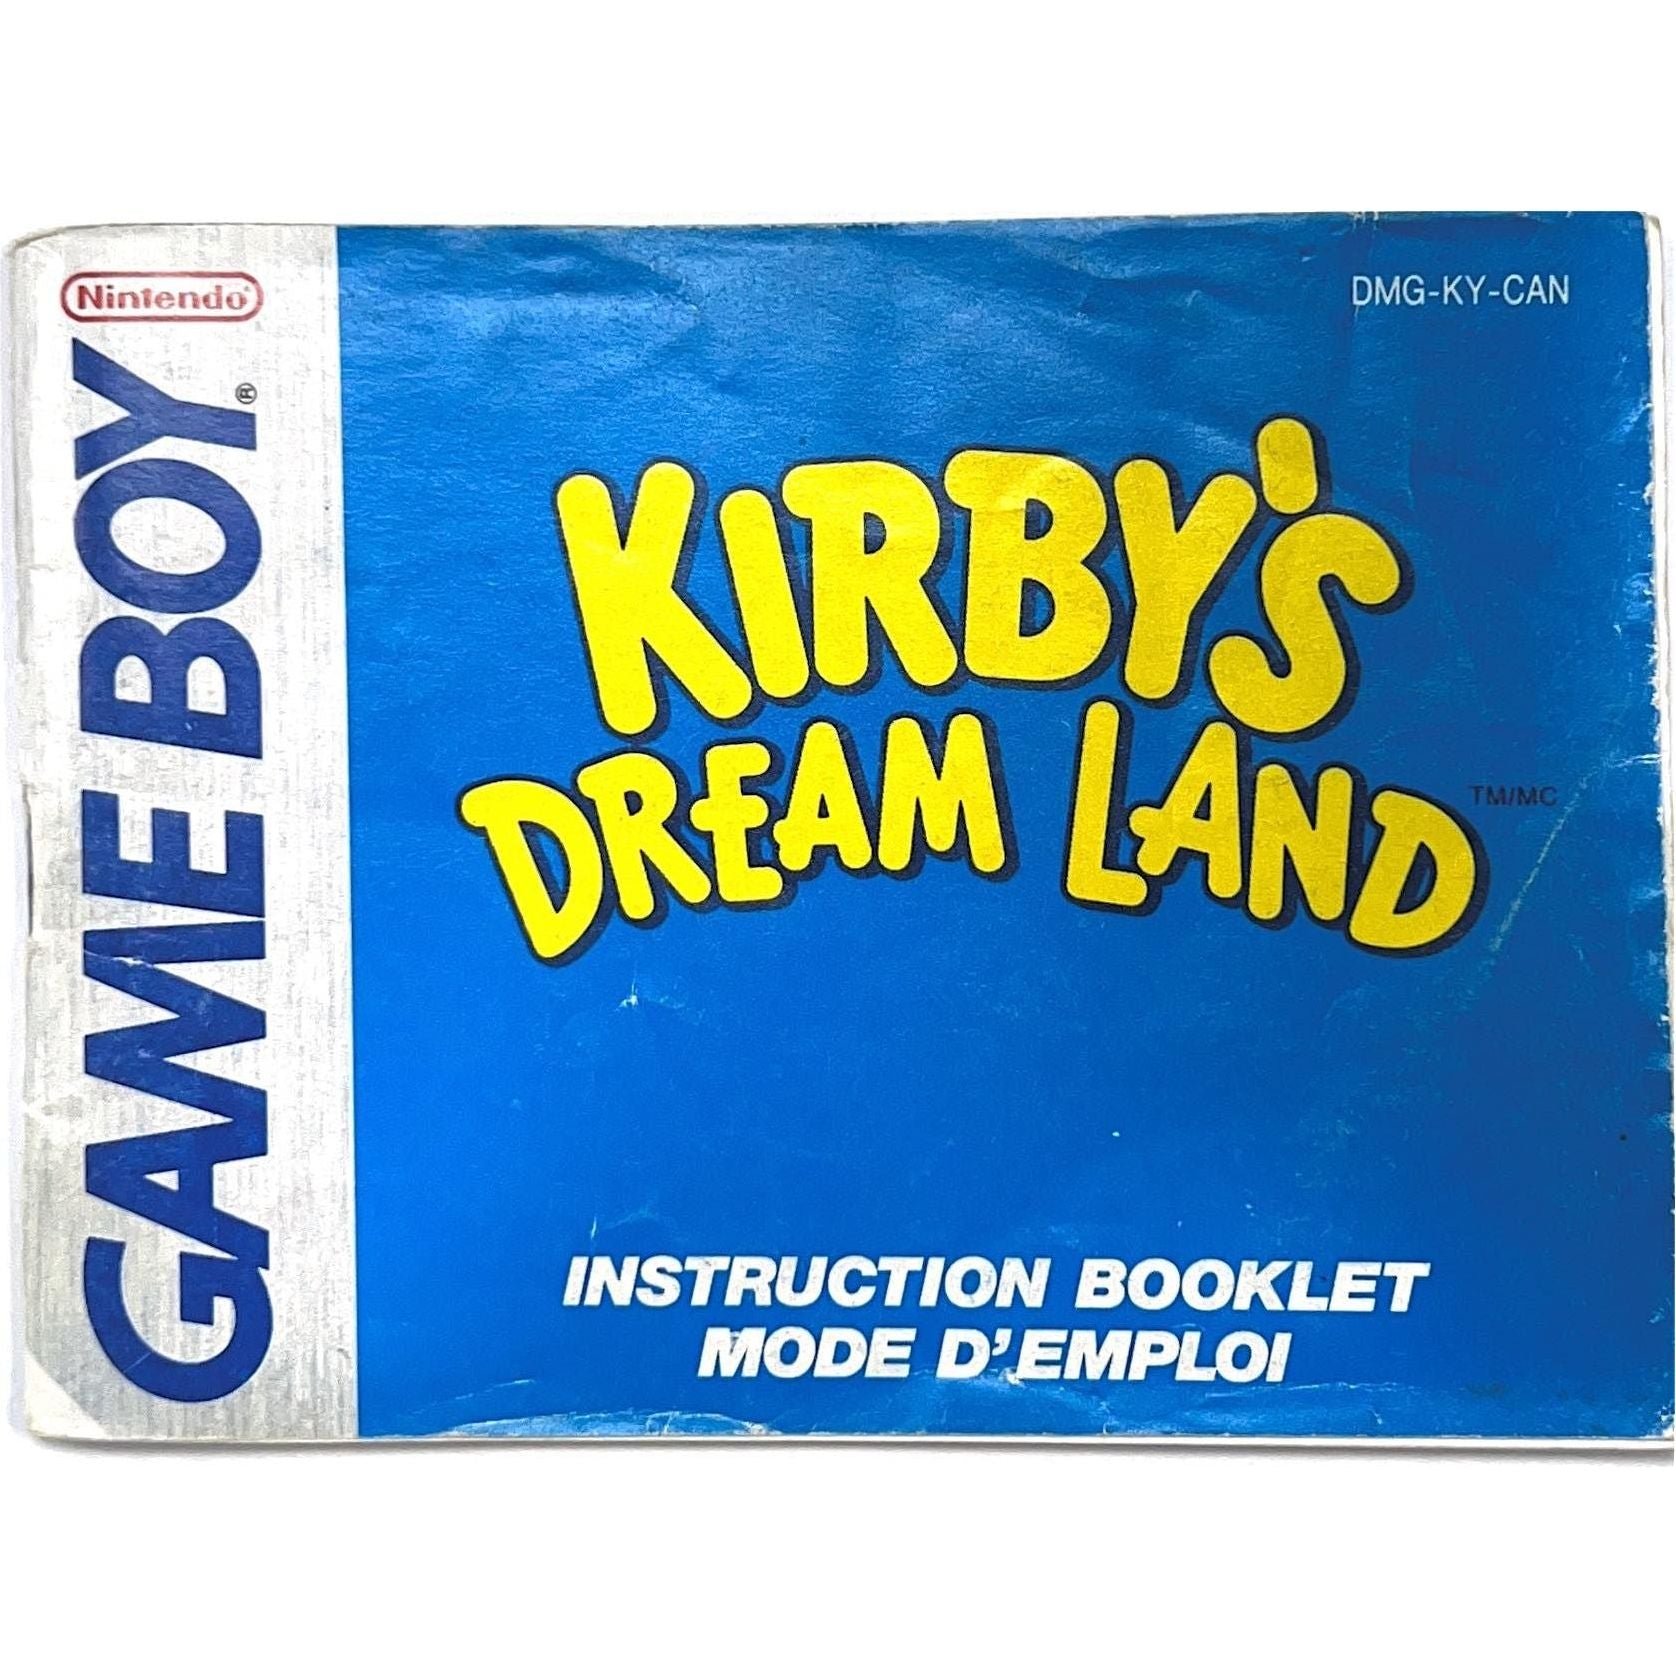 FR - Kirby's Dream Land (Manuel)